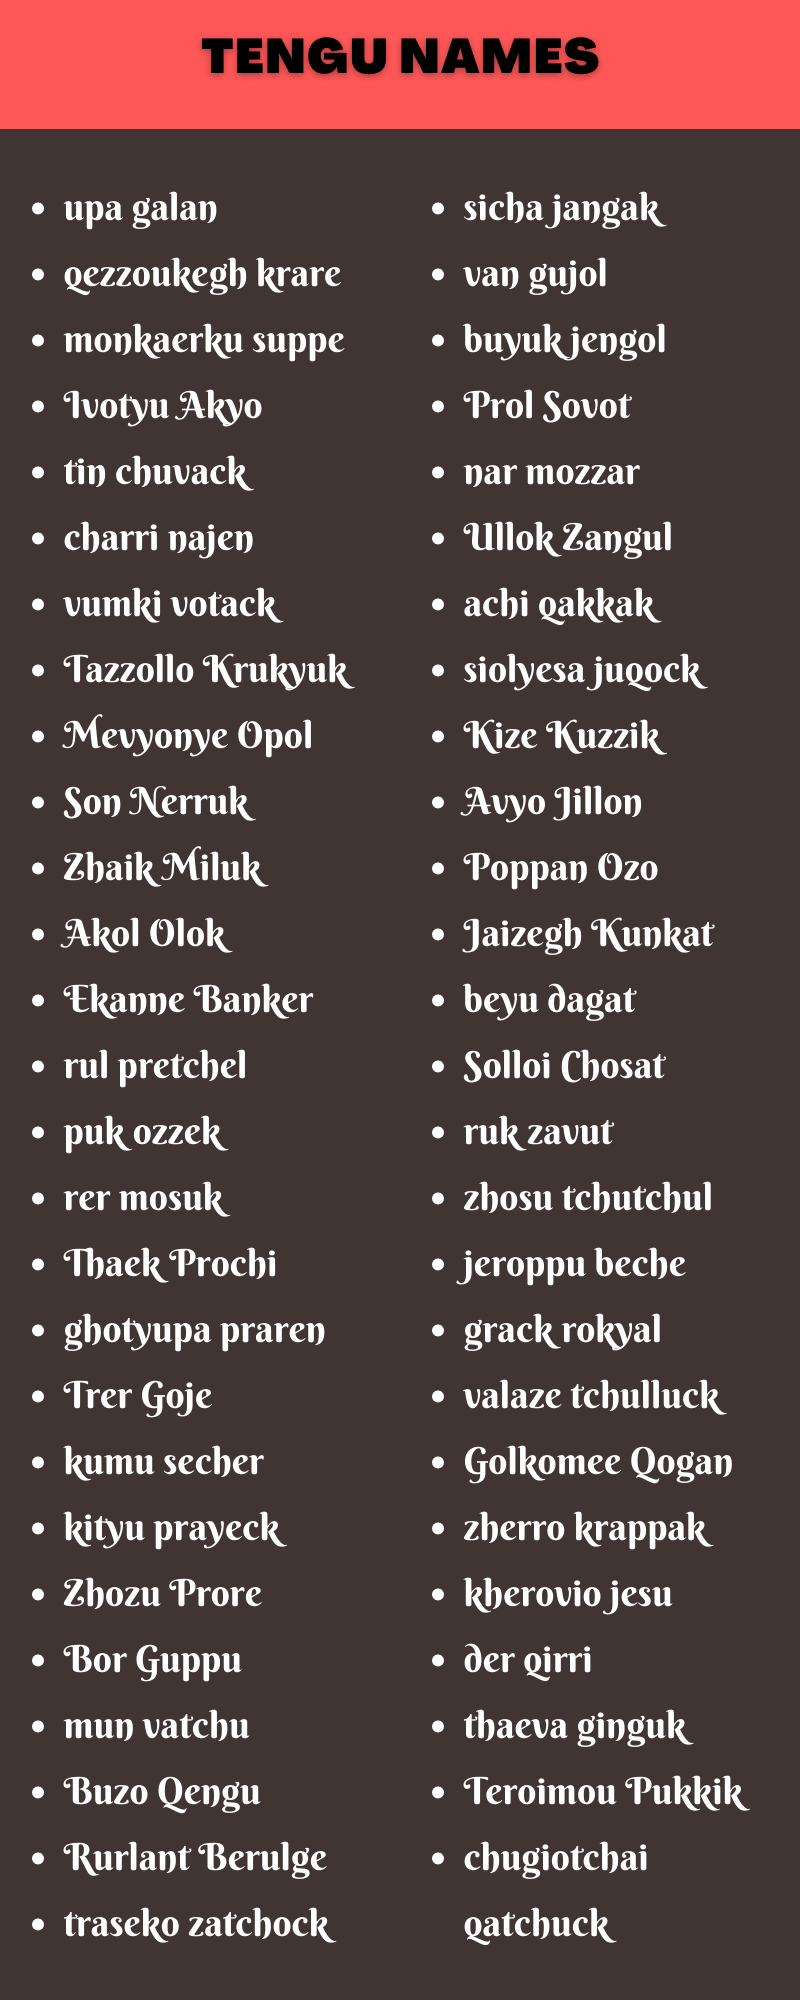 Tengu Names